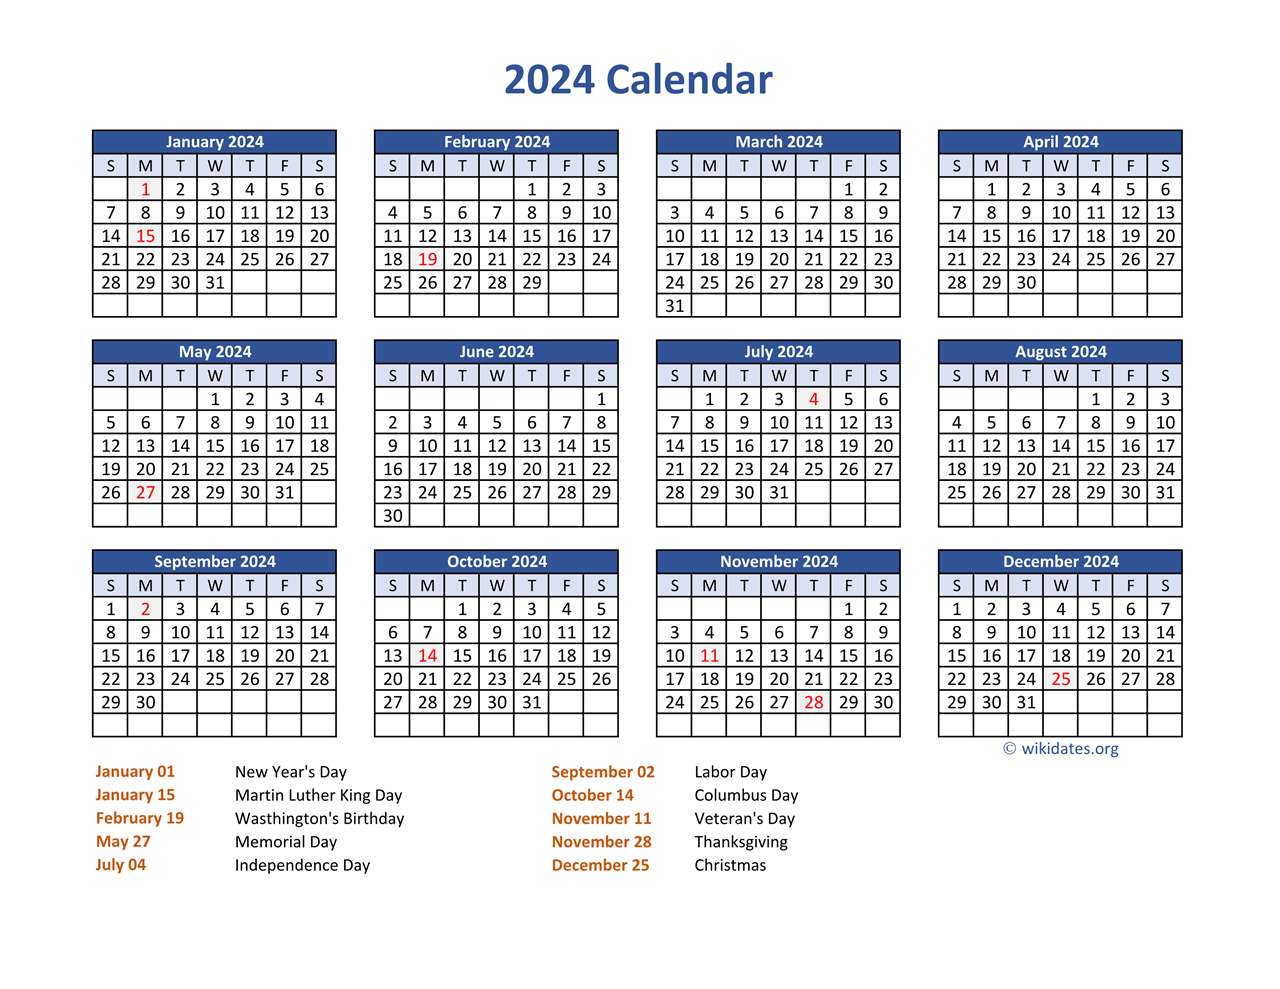 PDF Calendar 2024 with Federal Holidays WikiDates org